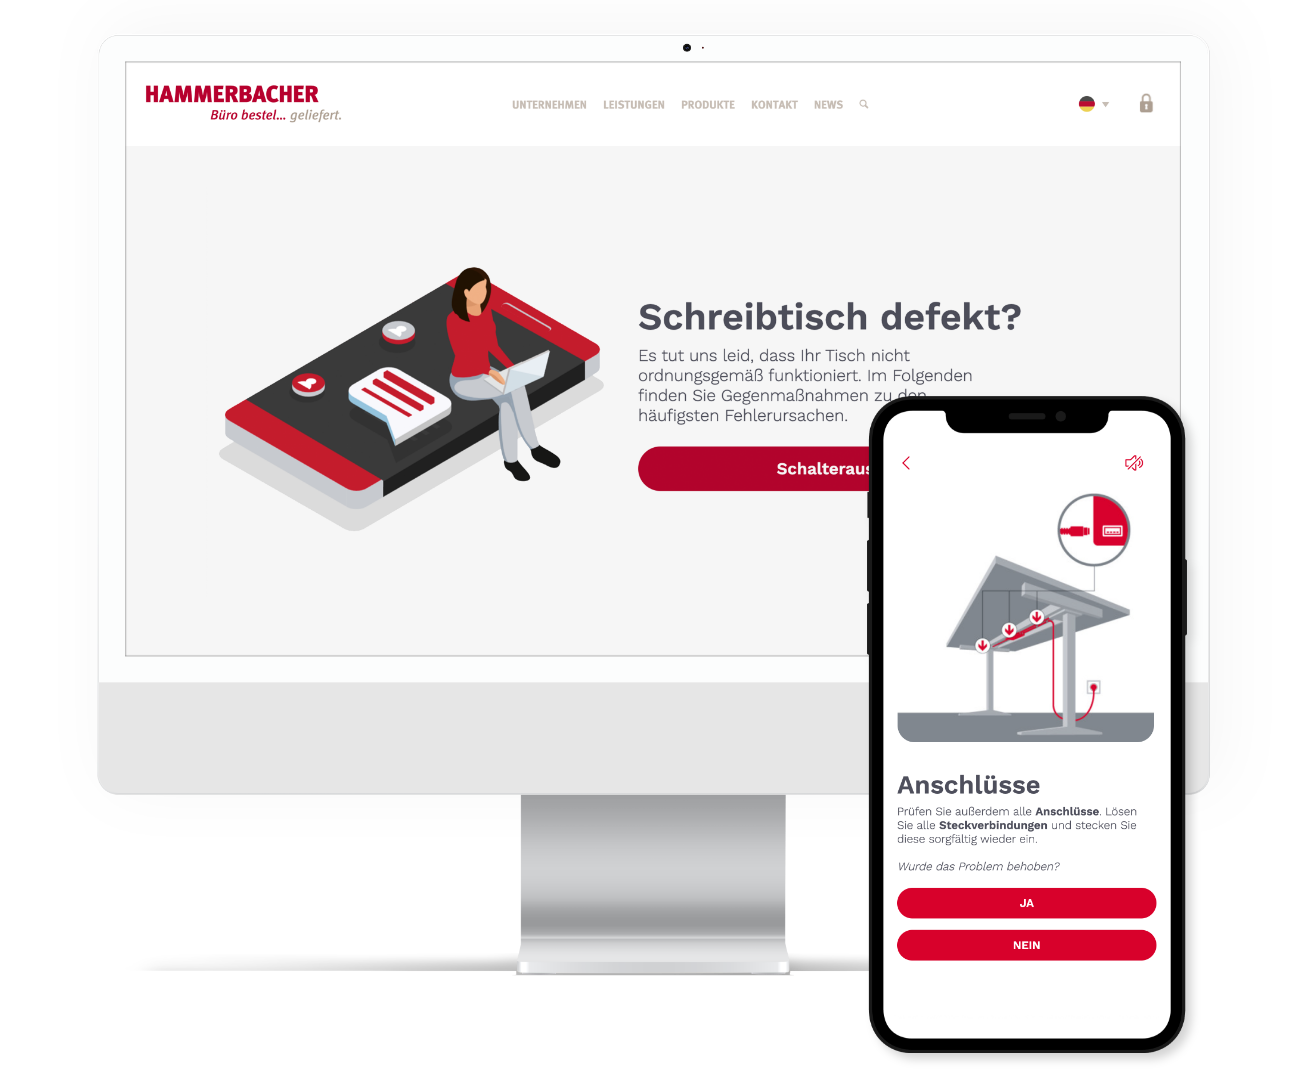 fivedigital-Referenz-Hammerbacher-Lottie